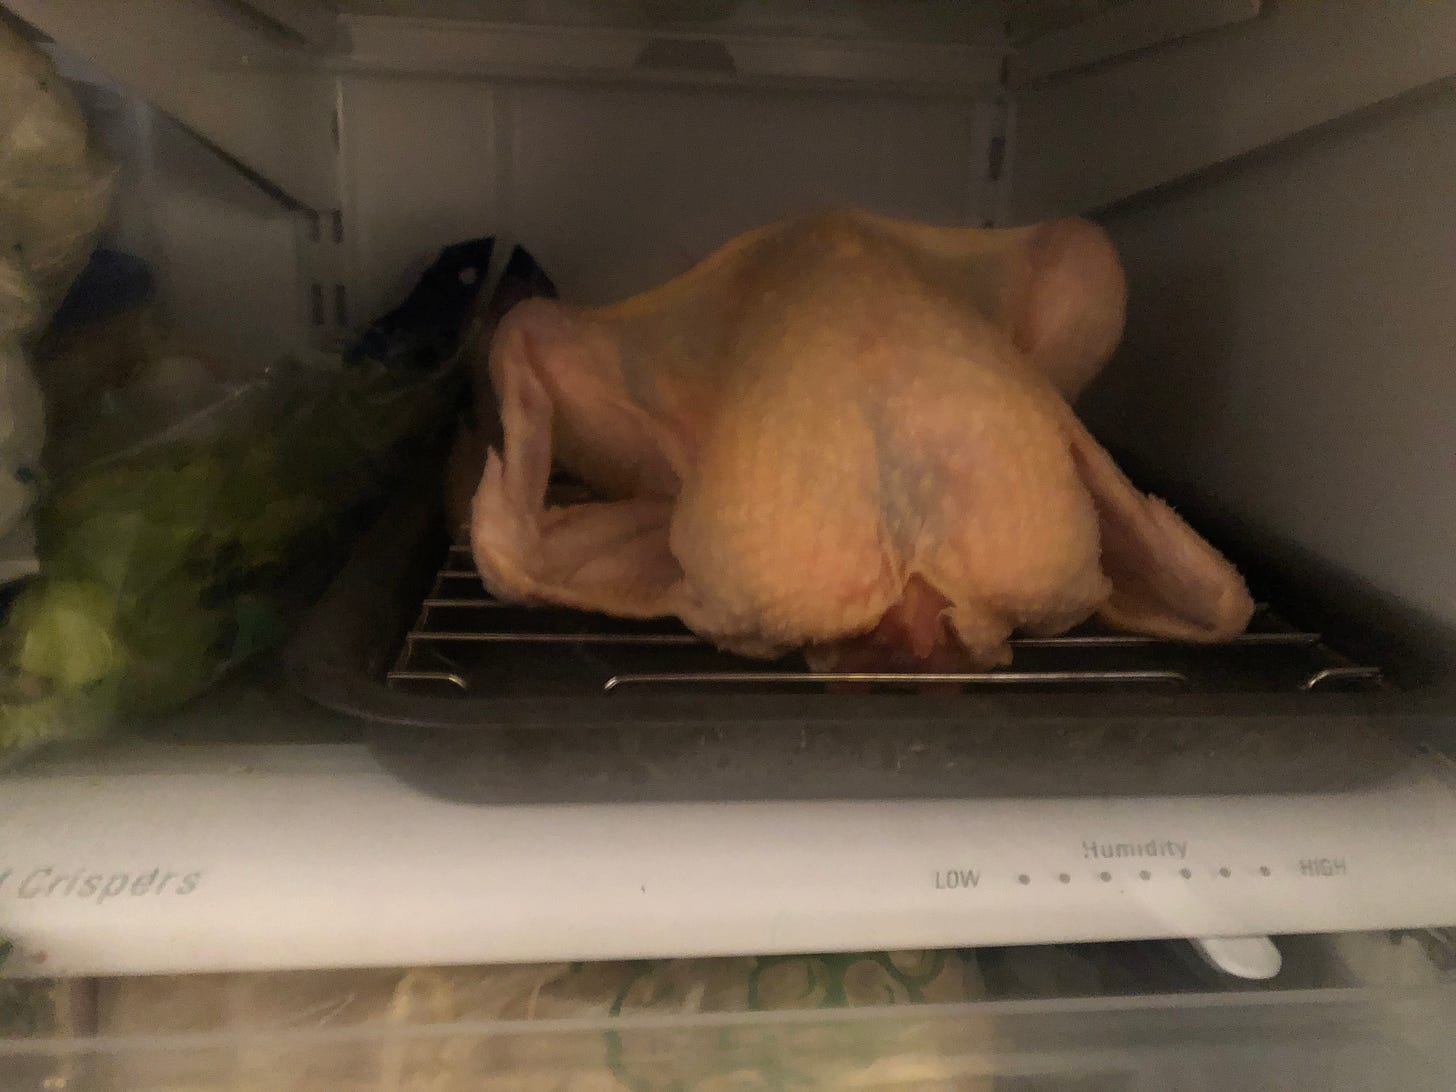 Chicken on rack on tray in fridge